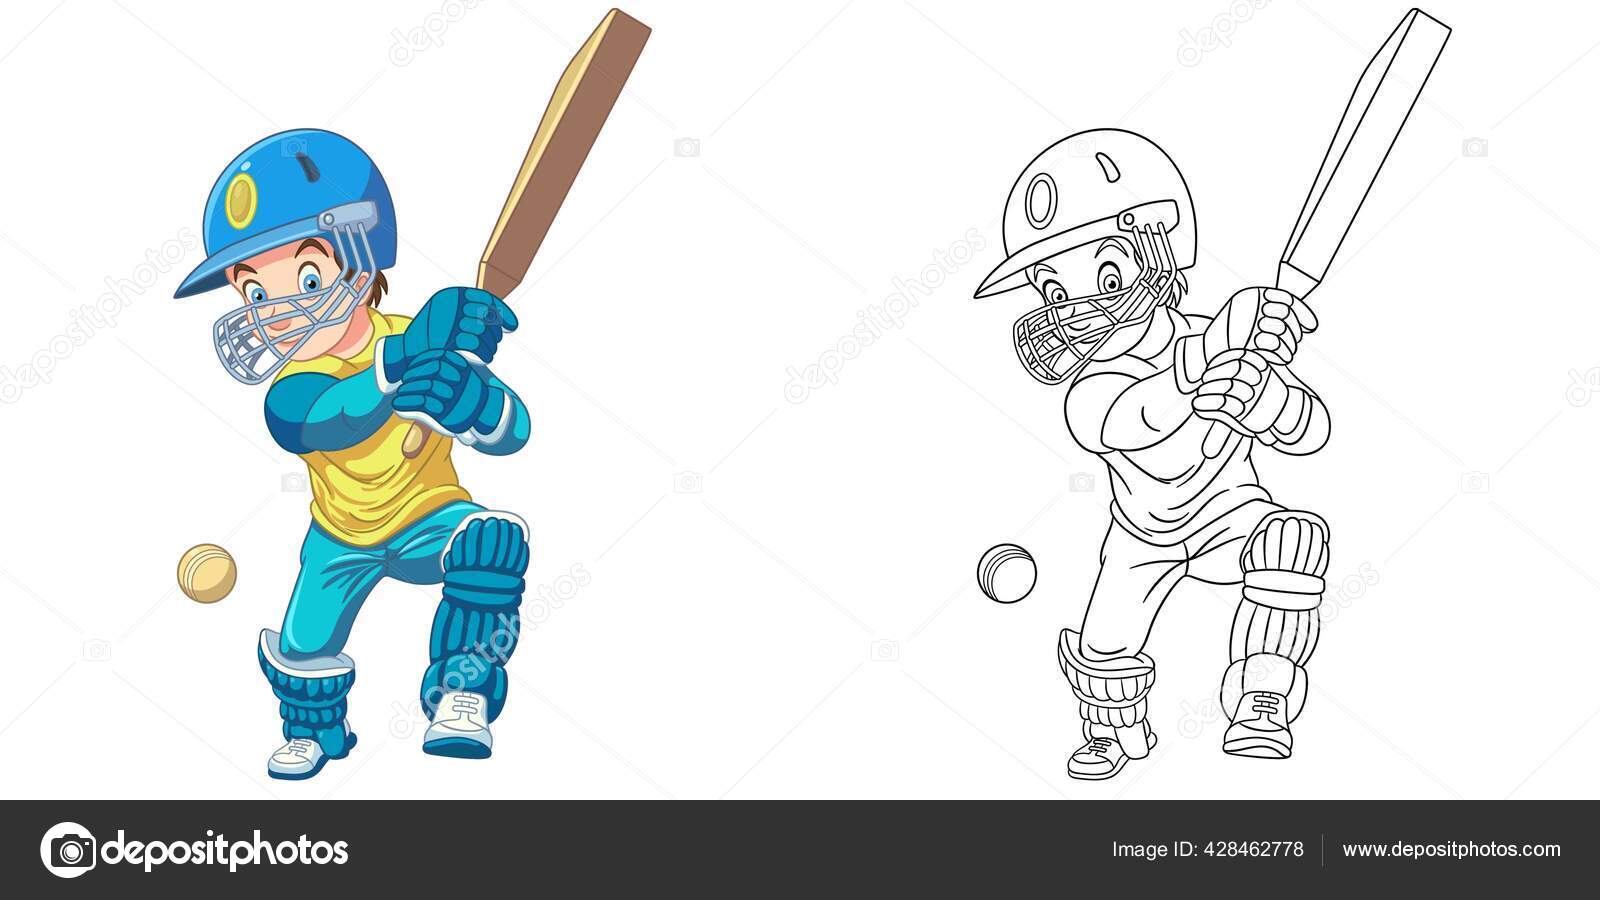 Cricket Player Batsman Batting Drawing, Stock Vector, Vector And Low Budget  Royalty Free Image. Pic. ESY-021559488 | agefotostock